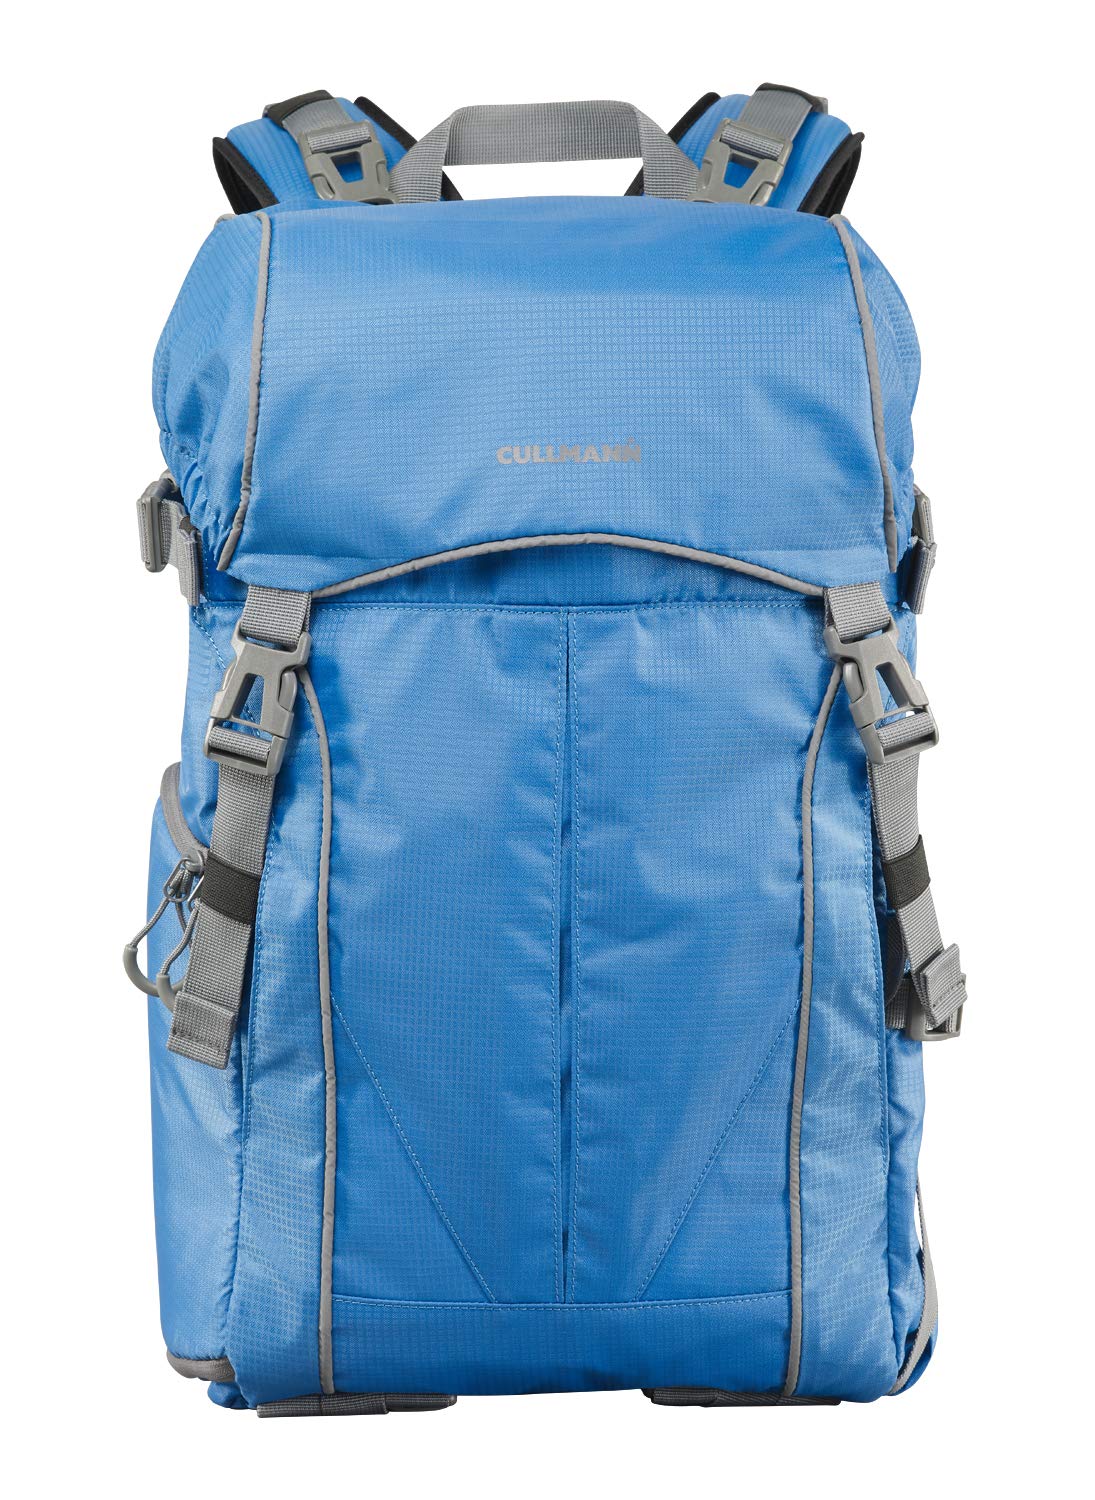 Cullmann 99451 ULTRALIGHT 2in1 Daypack 600+ Foto-/Wanderrucksack mit Schultertasche, Innenmaß Kamerafach 240x190x120mm, blau